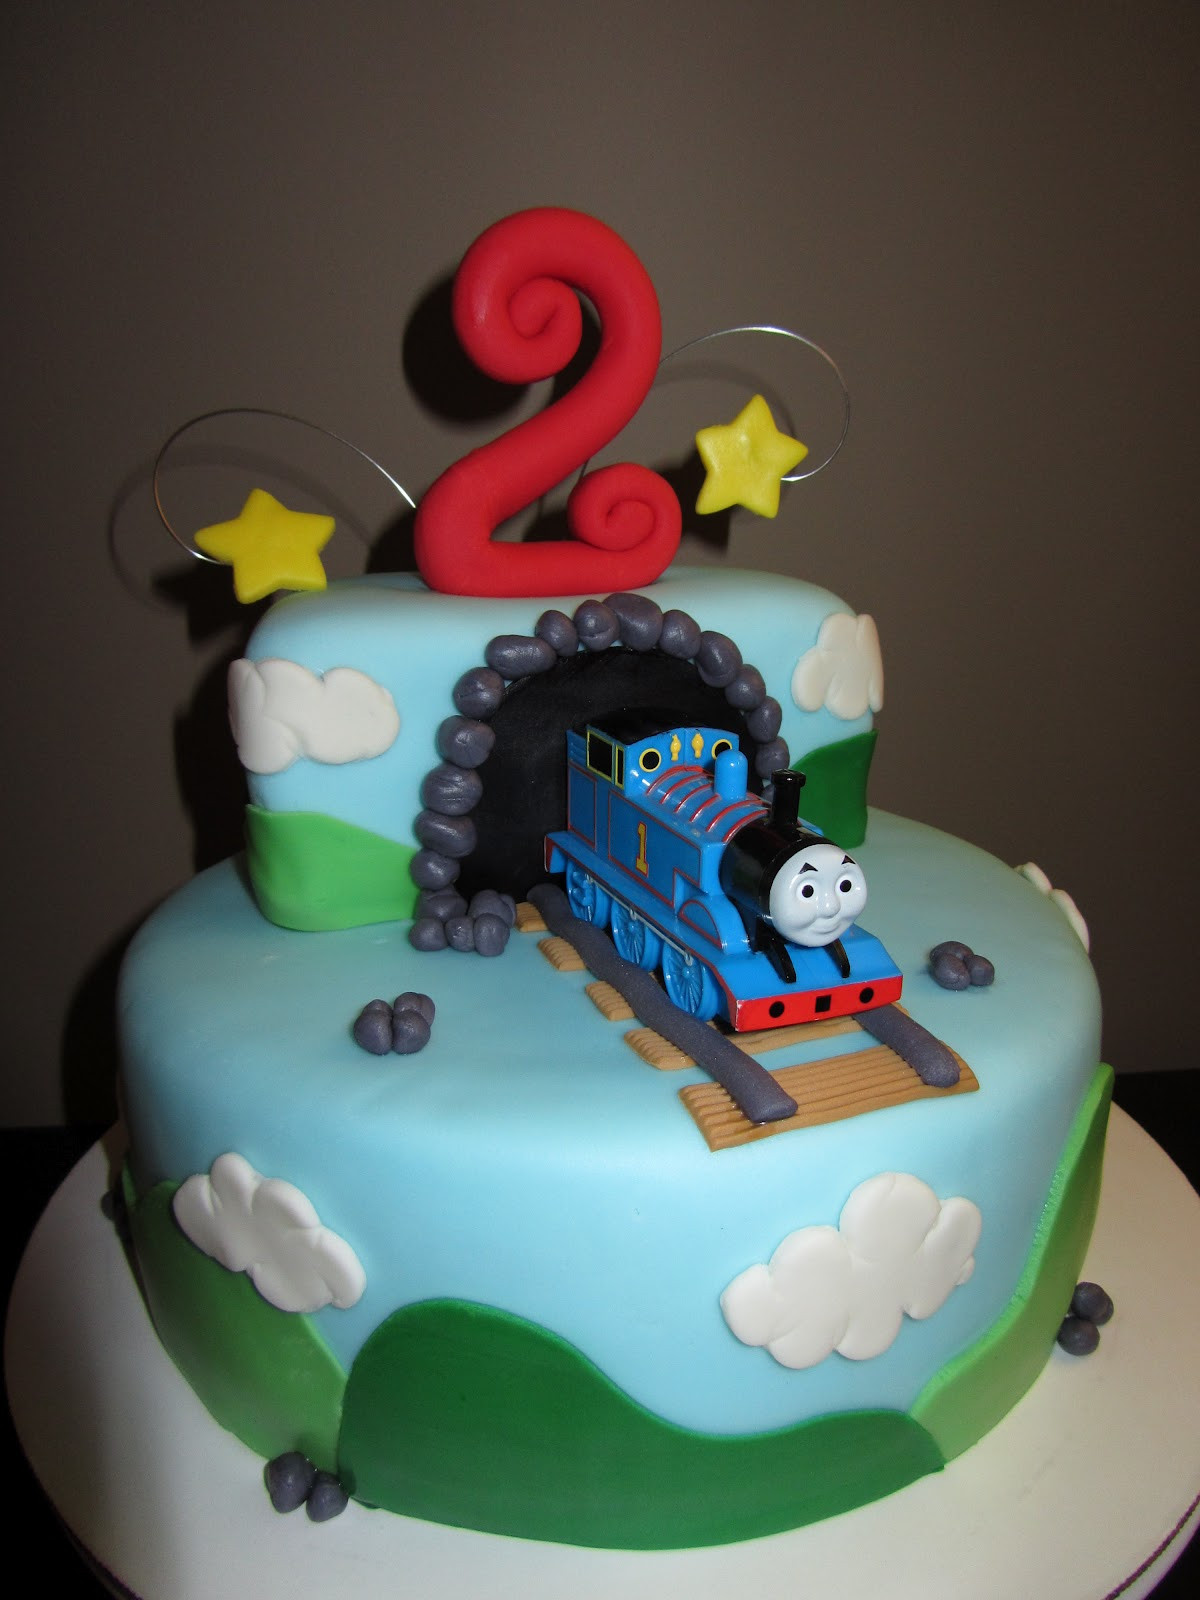 Thomas The Train Birthday Cakes
 The Sweet Life Thomas The Train 2nd Birthday Cake